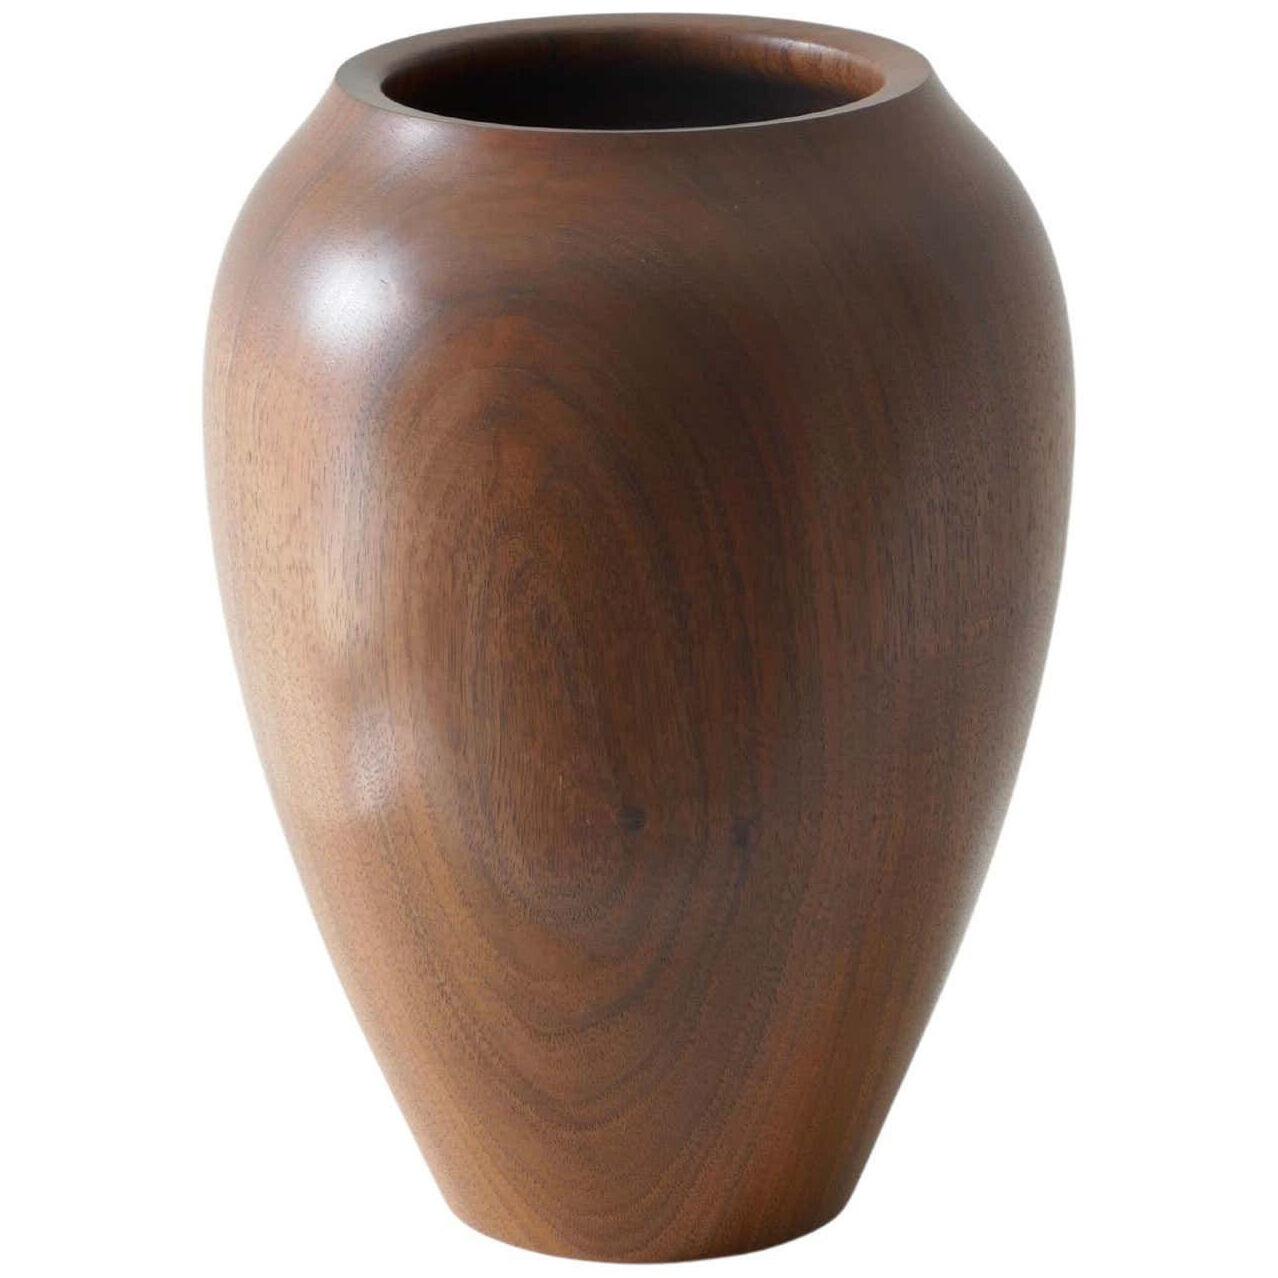 Turned Wood Vase in Walnut, English, Late 20th century